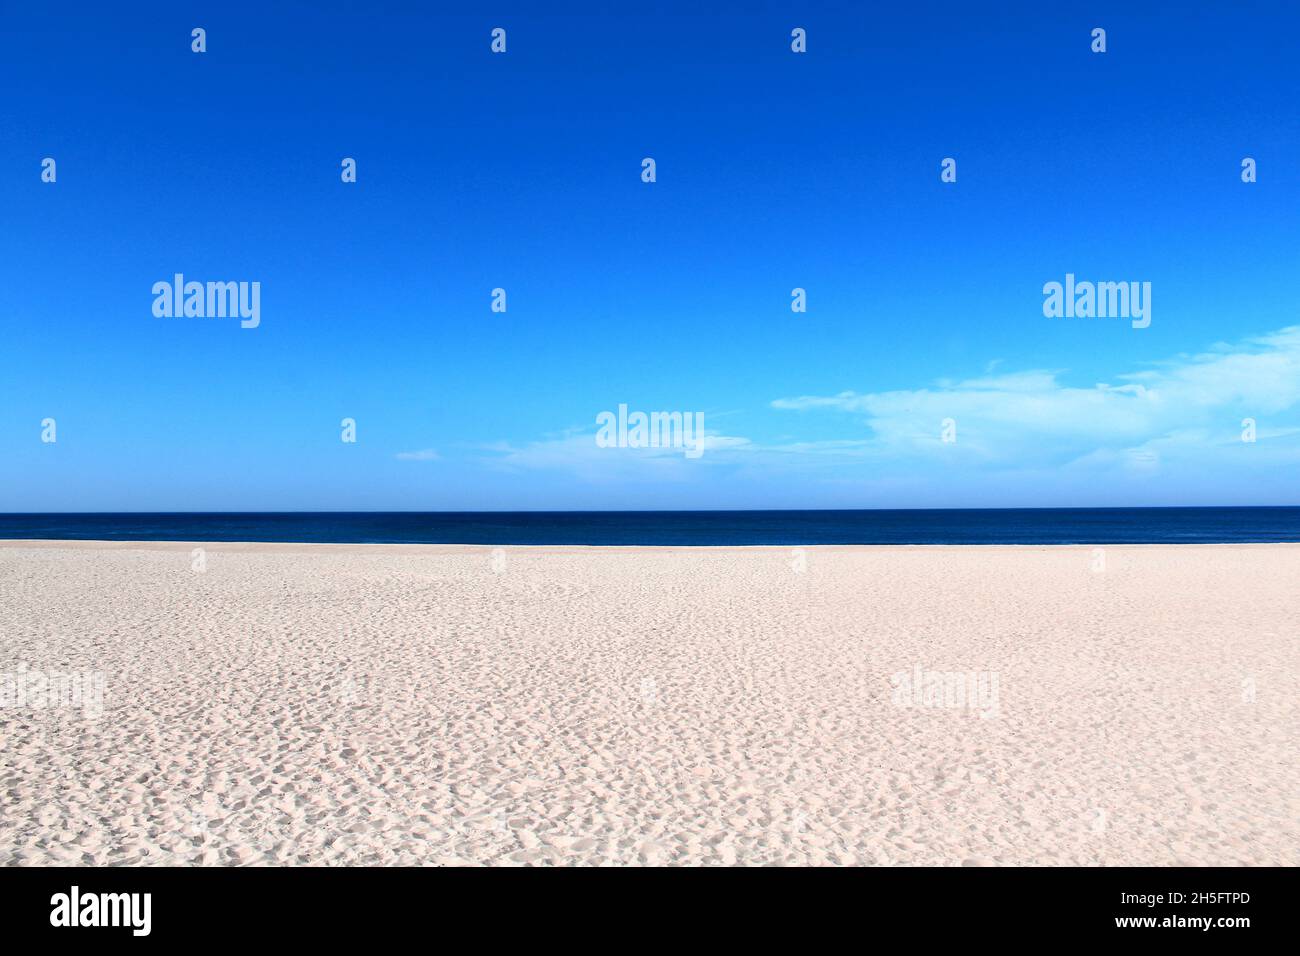 Grafische, abstrakte Landschaft: menschenleerer Sandstrand, Meer, Himmel. In Espinho, Portugal. Abstrakte Landschaftsfotografie. Stock Photo